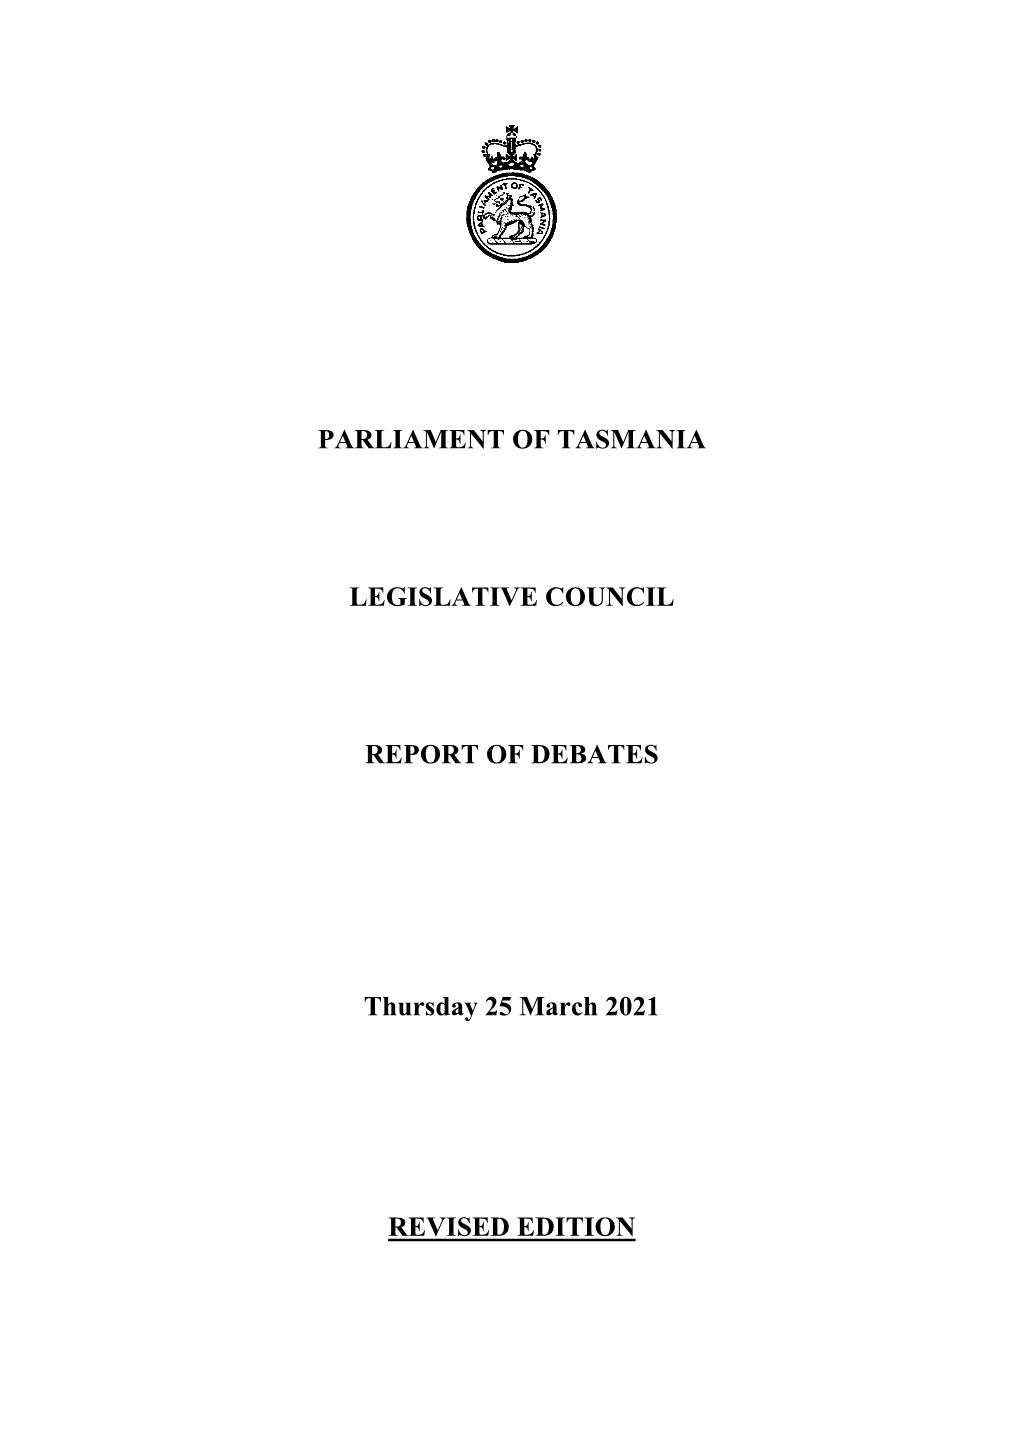 Legislative Council Thursday 25 March 2021